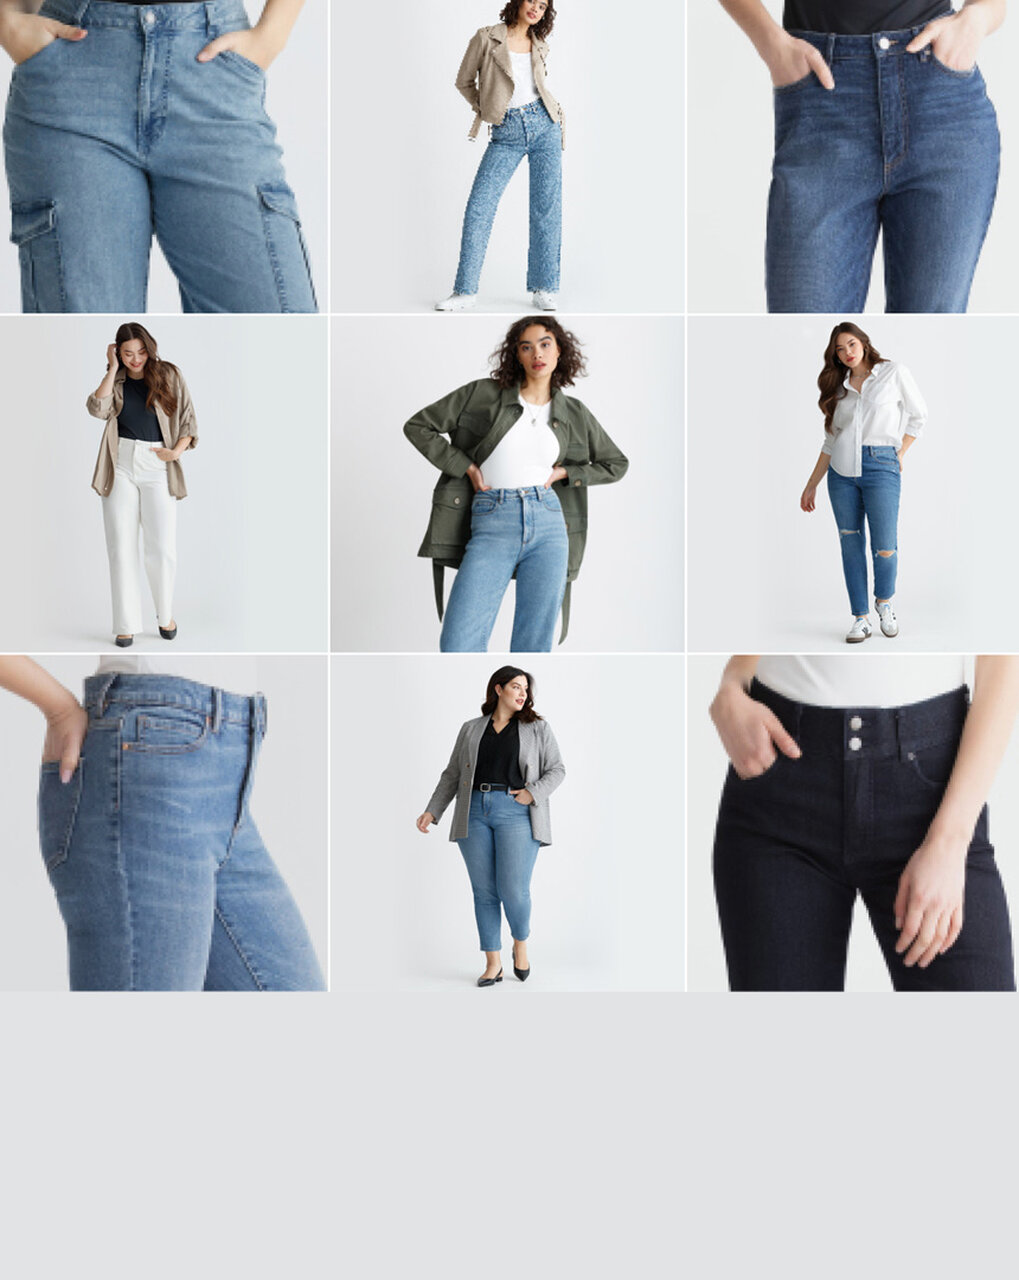 Types of Women’s Jeans 